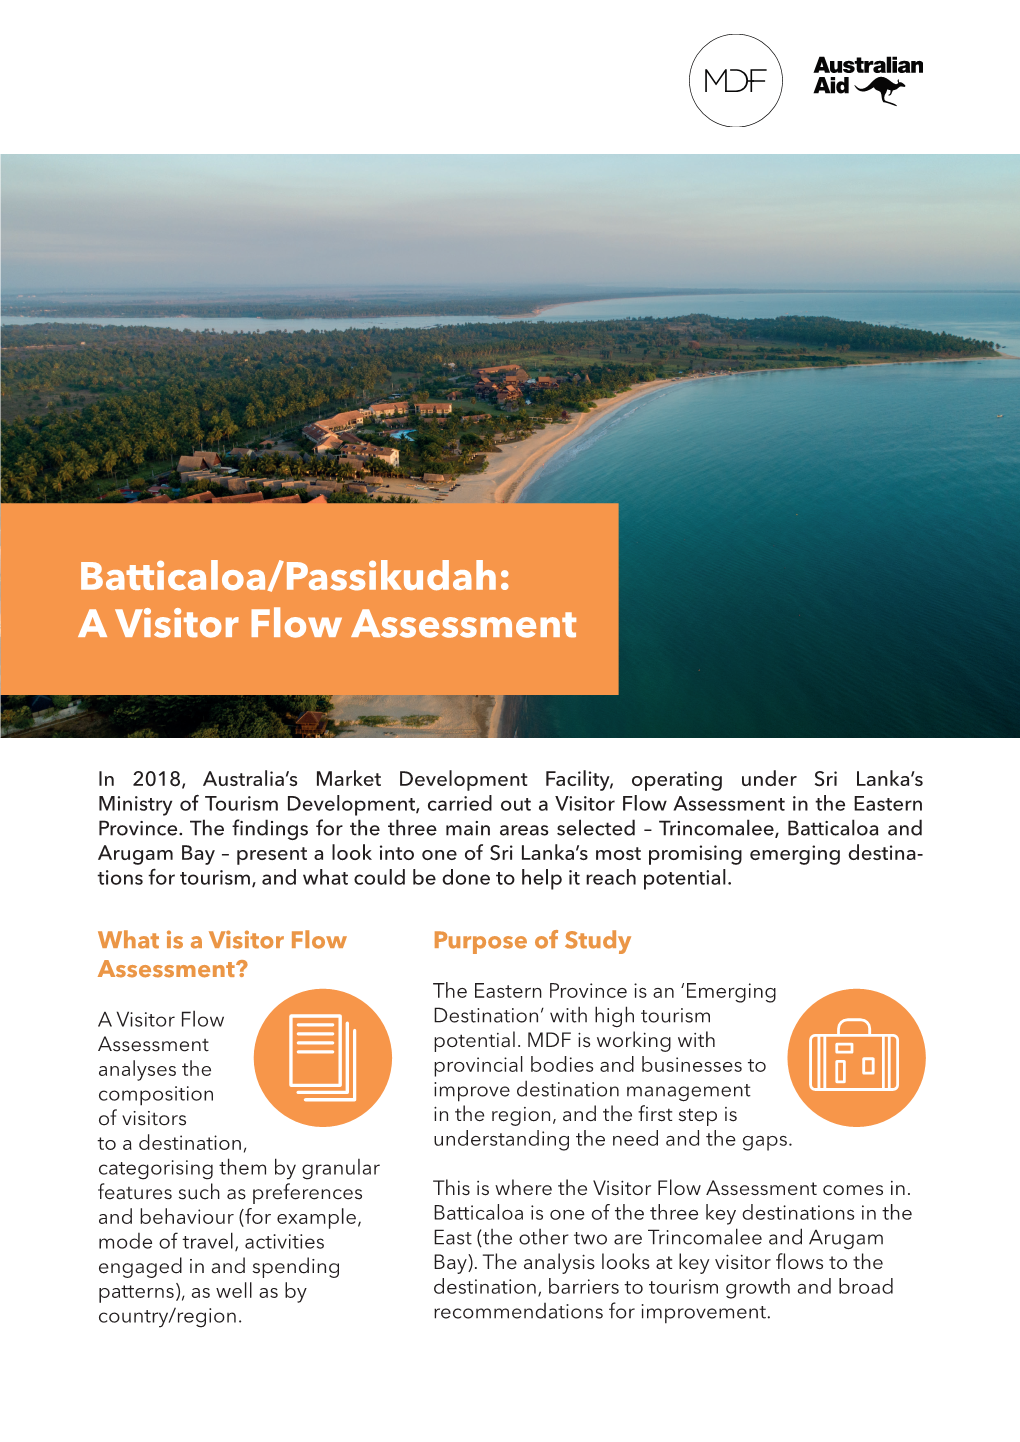 Batticaloa/Passikudah: a Visitor Flow Assessment